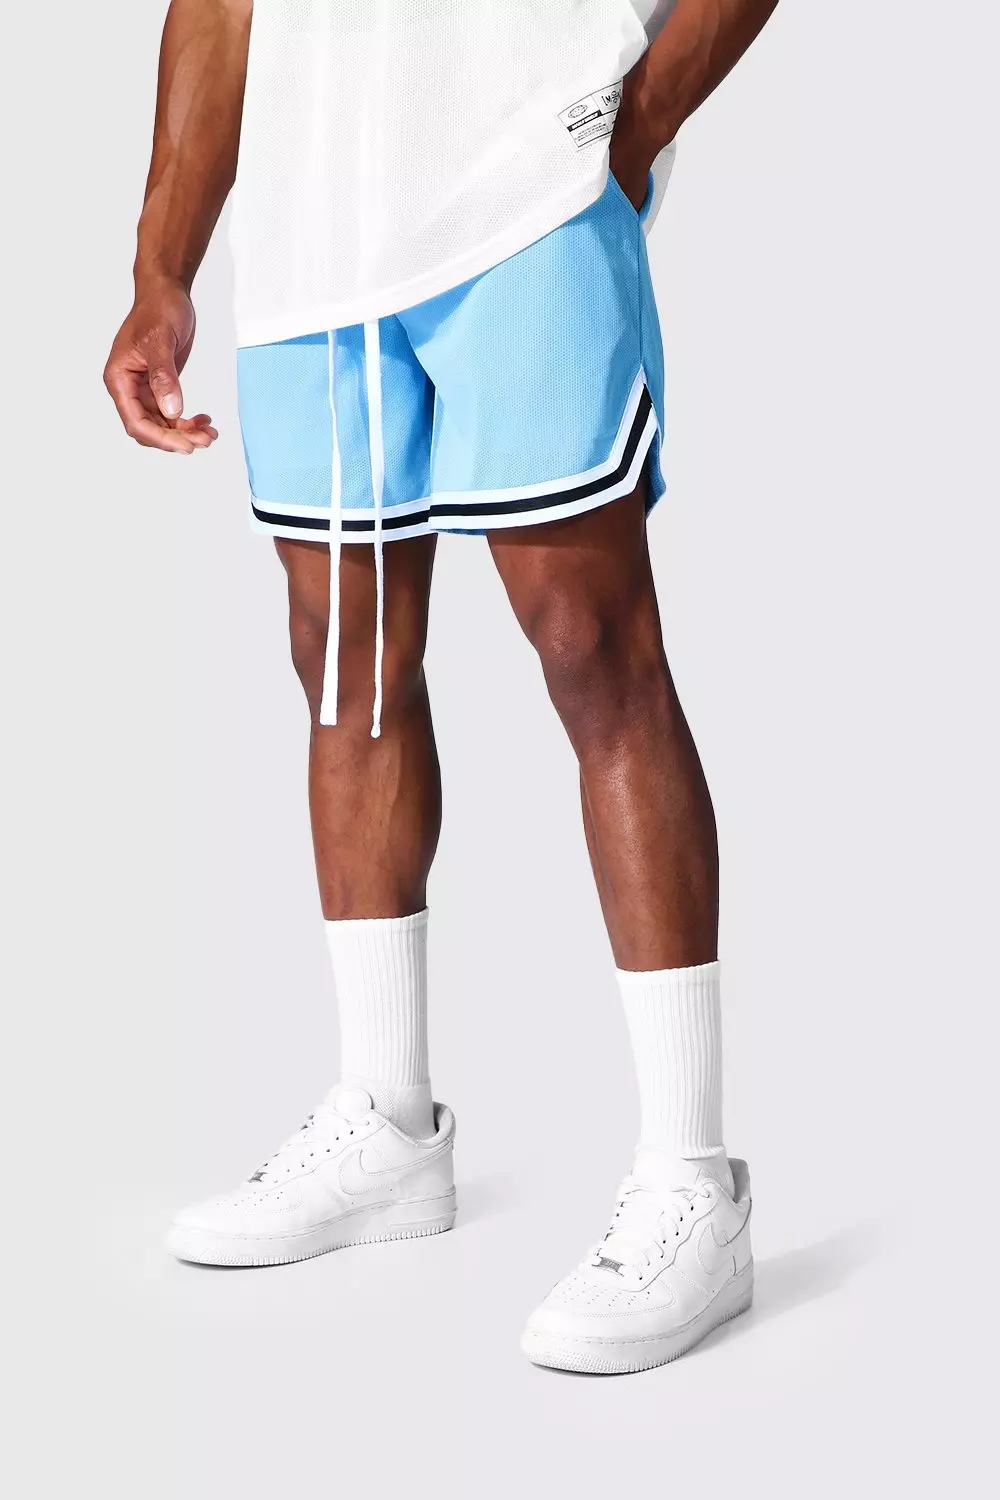 Boohoo Man Shorts Men's Size L Drawstring Basketball Blue shorts Inner  Lining